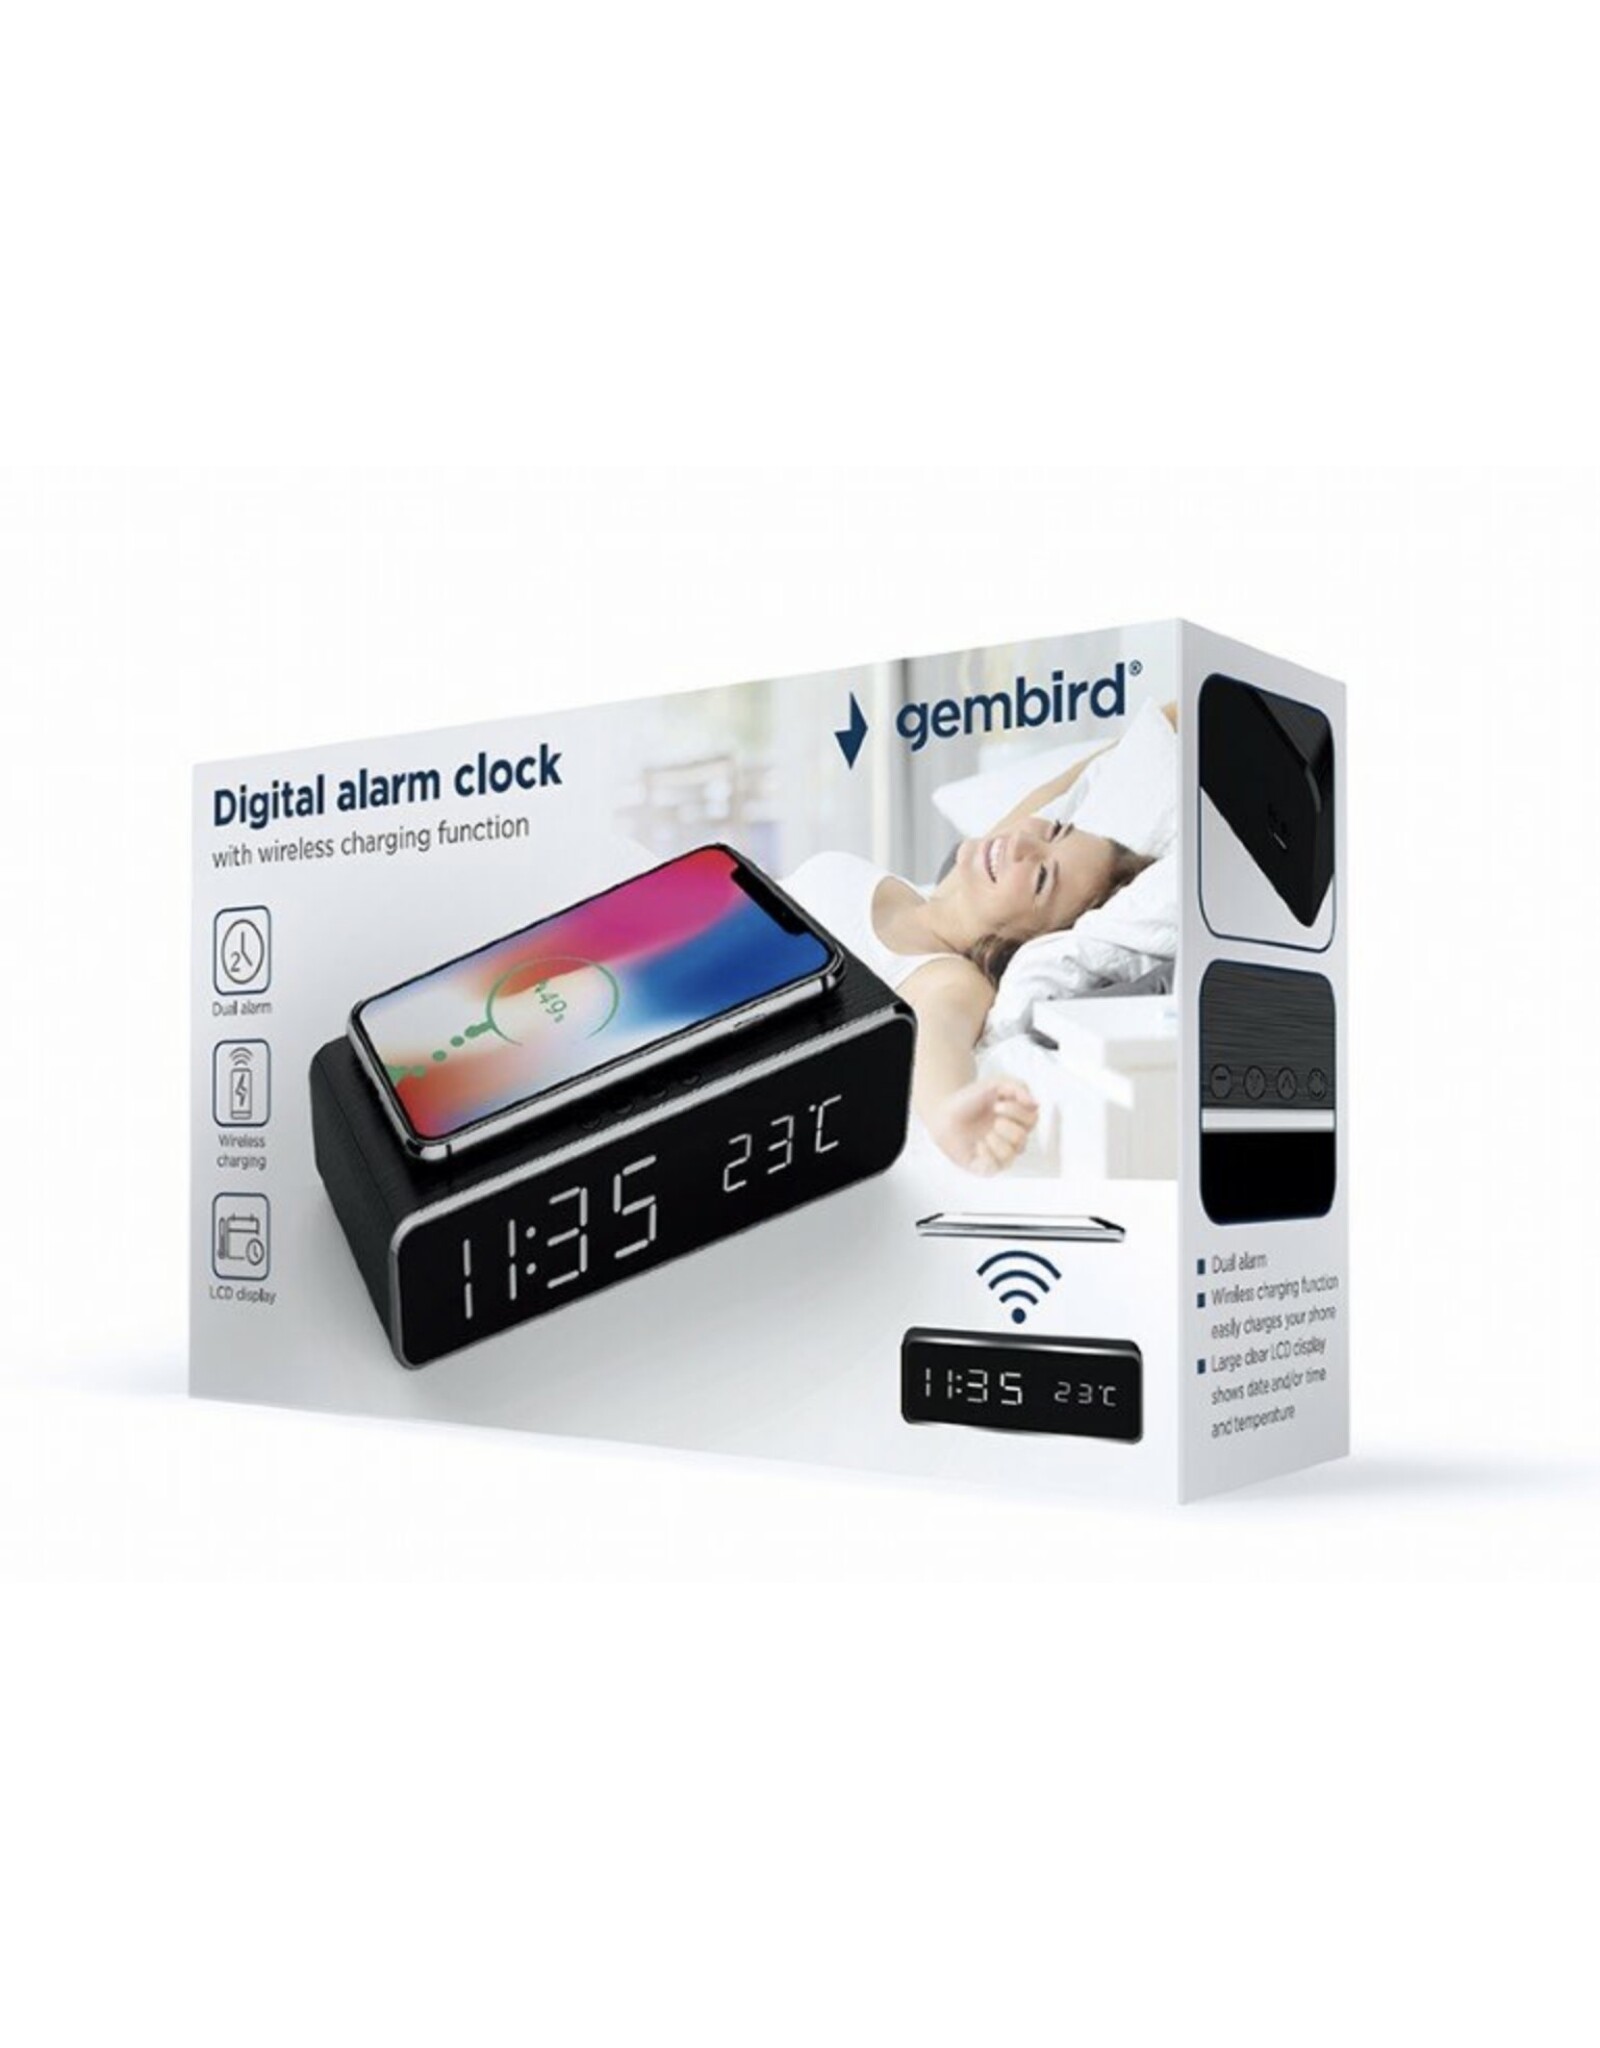 Gembird Gembird Digitale wekker met draadloze lader met Qi Wireless Charging technologie - 1A / zwart